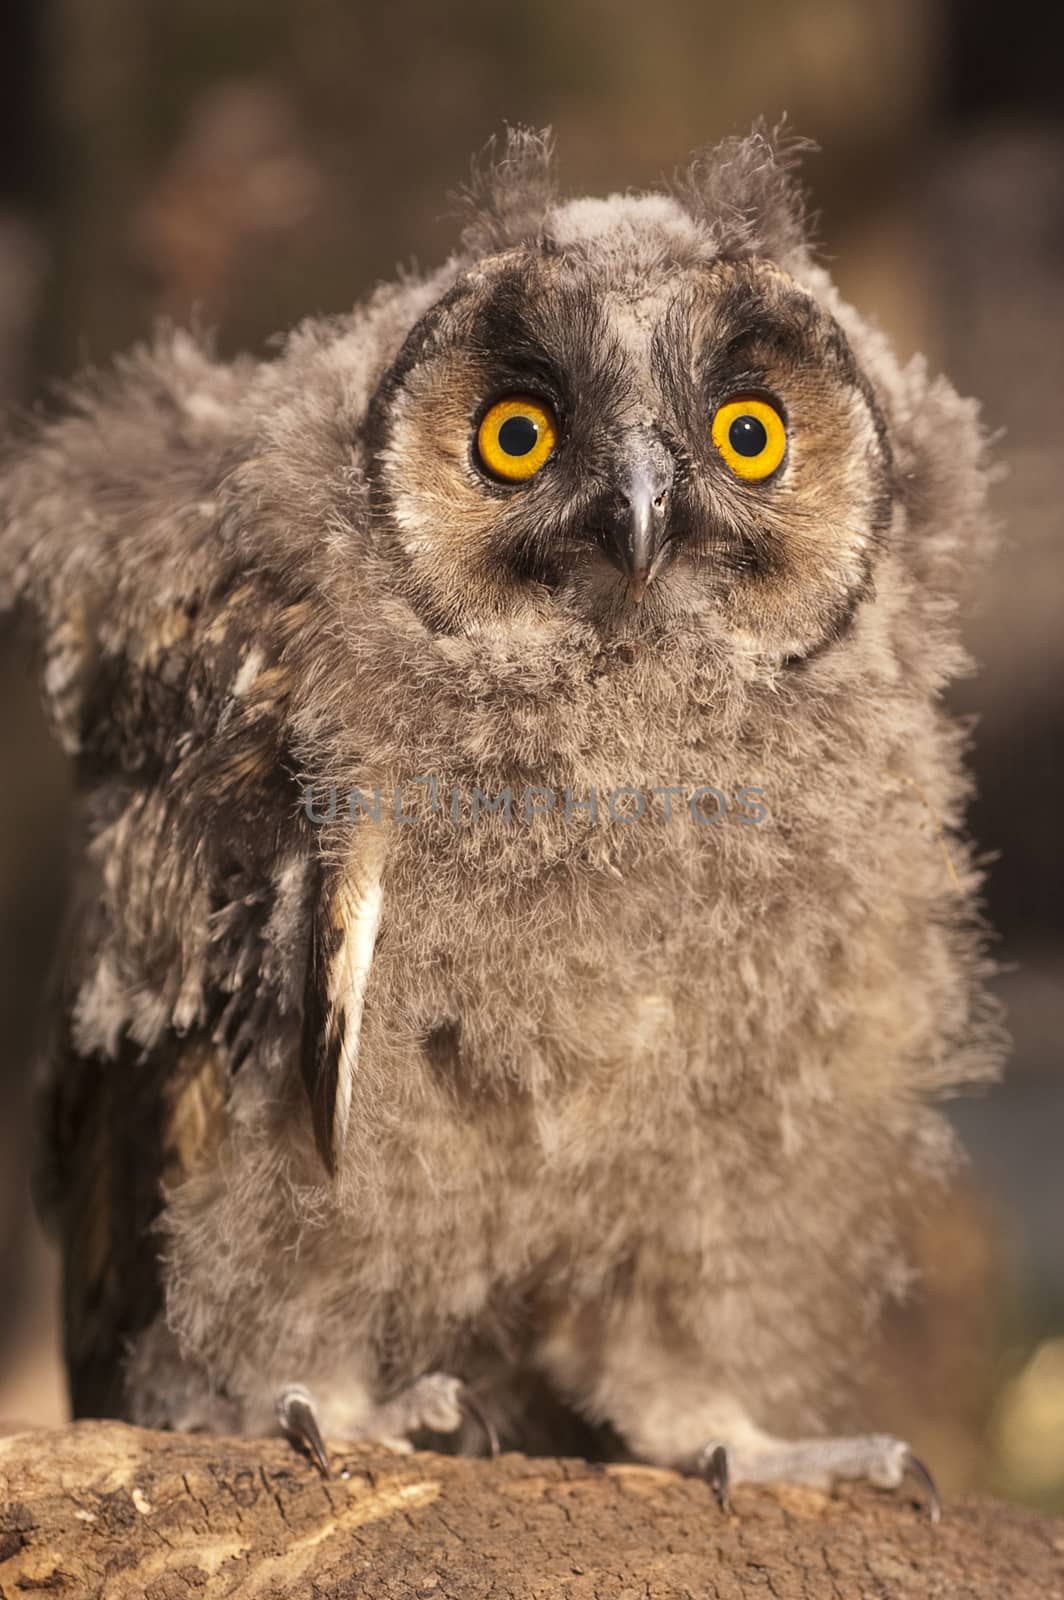 Long-eared owl, young (Asio otus), portrait